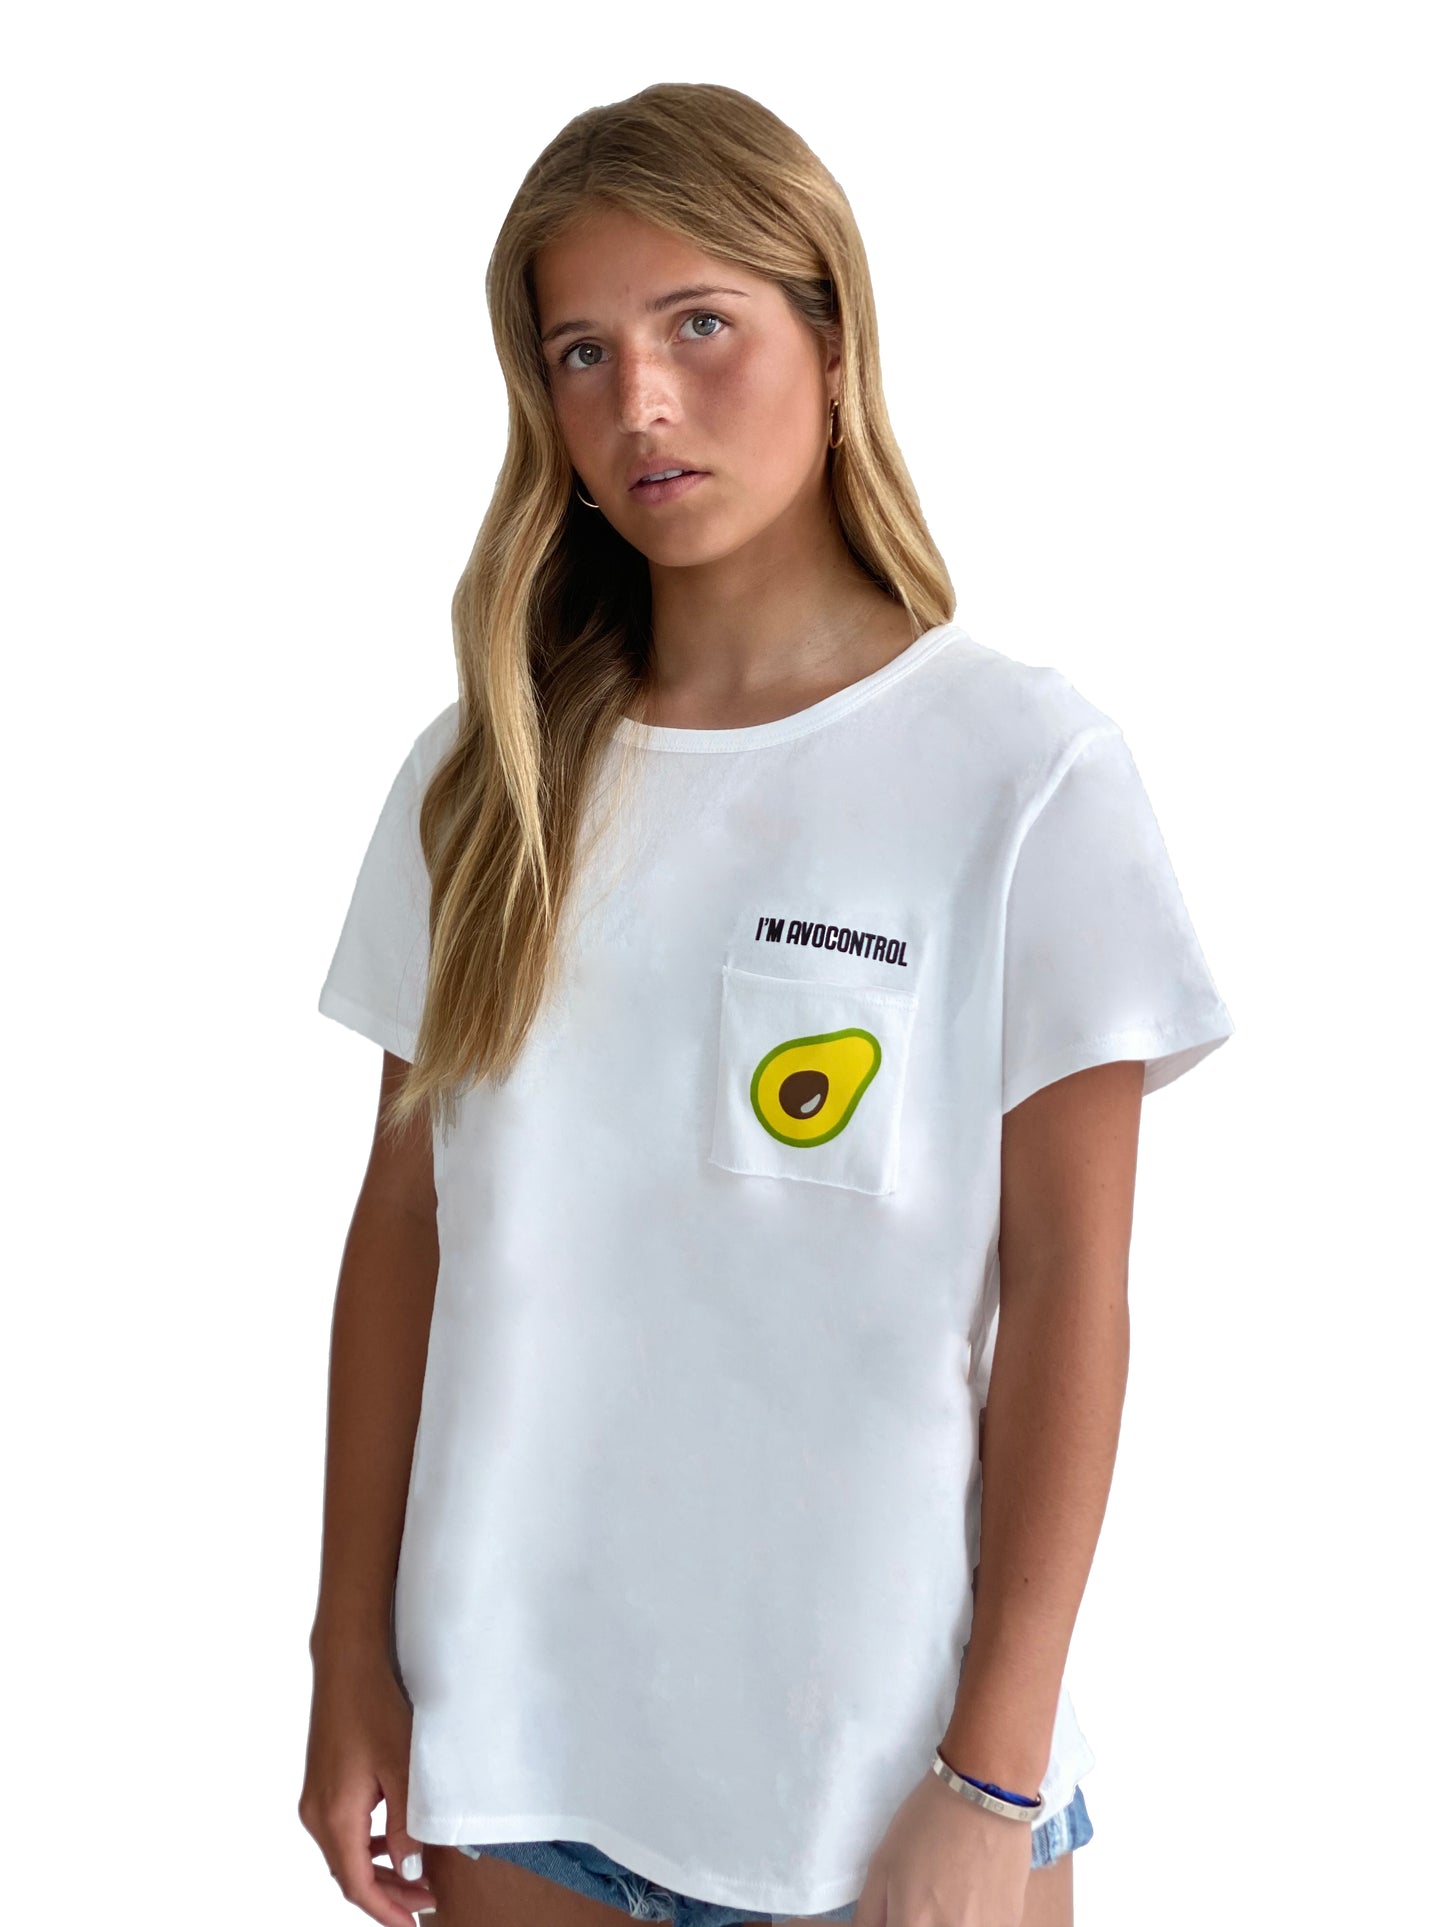 Women's T-Shirt - "I'm Avocontrol"